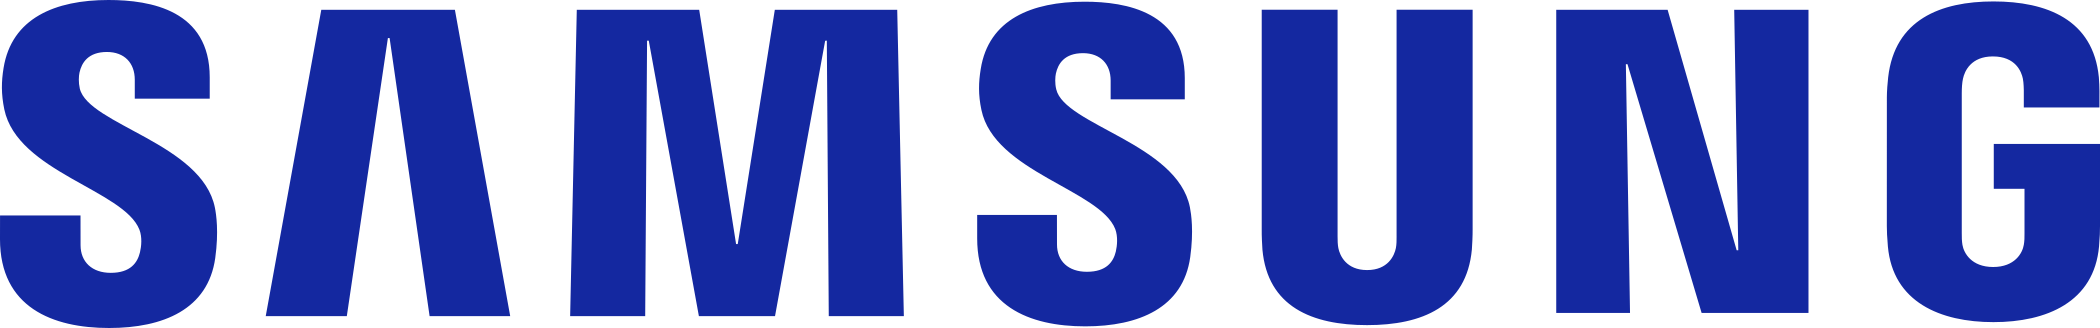 samsung logo 2 1 - Samsung Logo